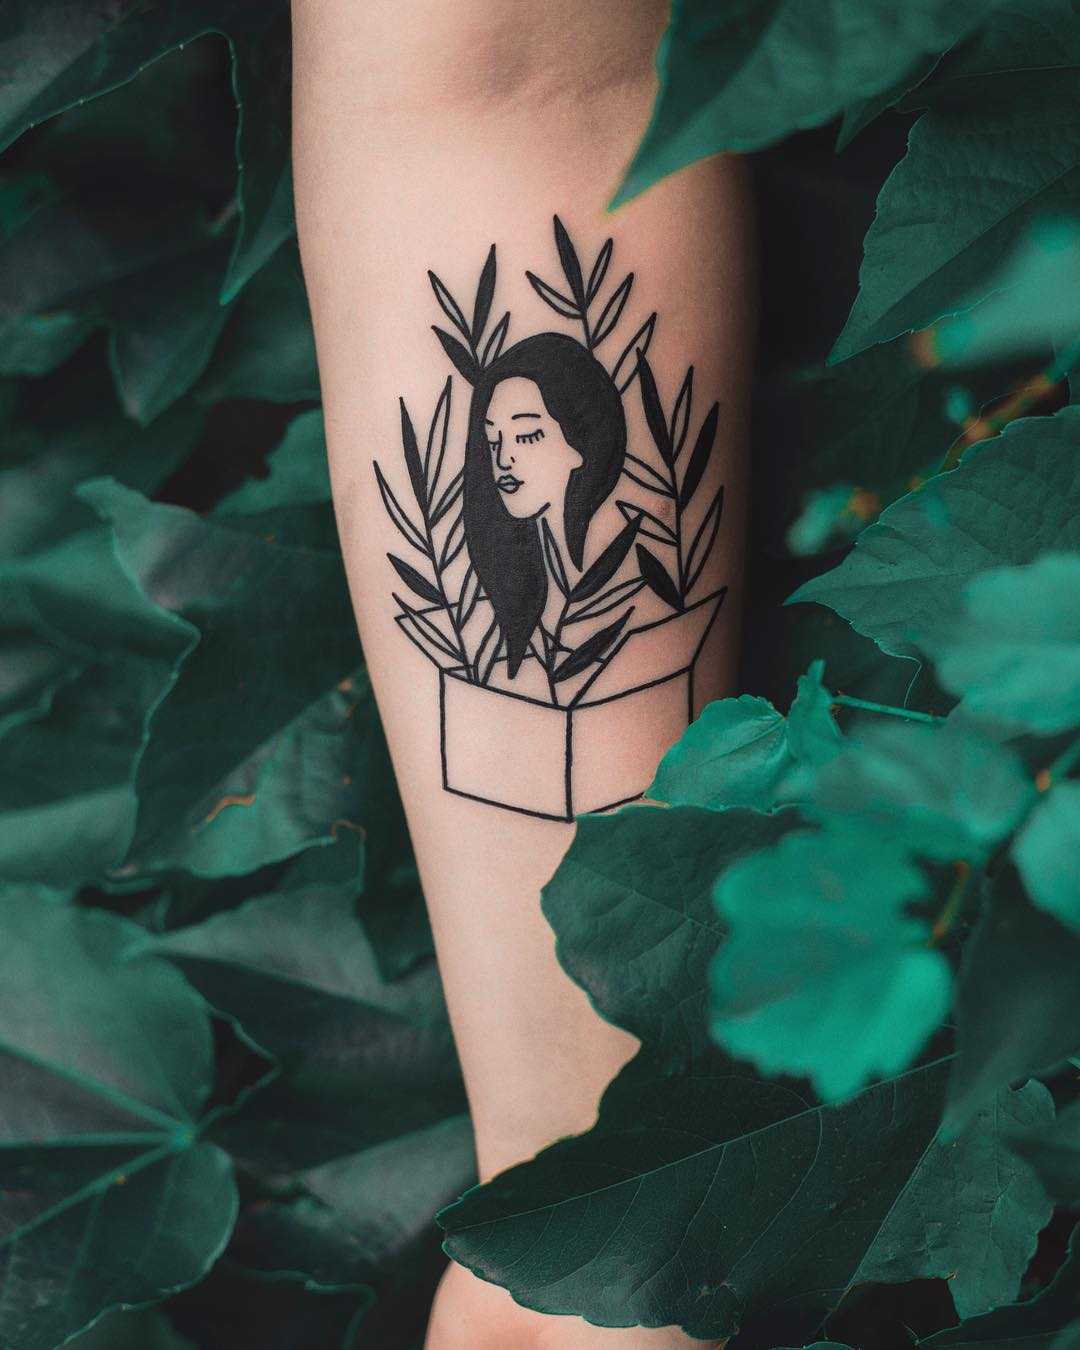 Lady in a box tattoo by Dżudi Bazgrole